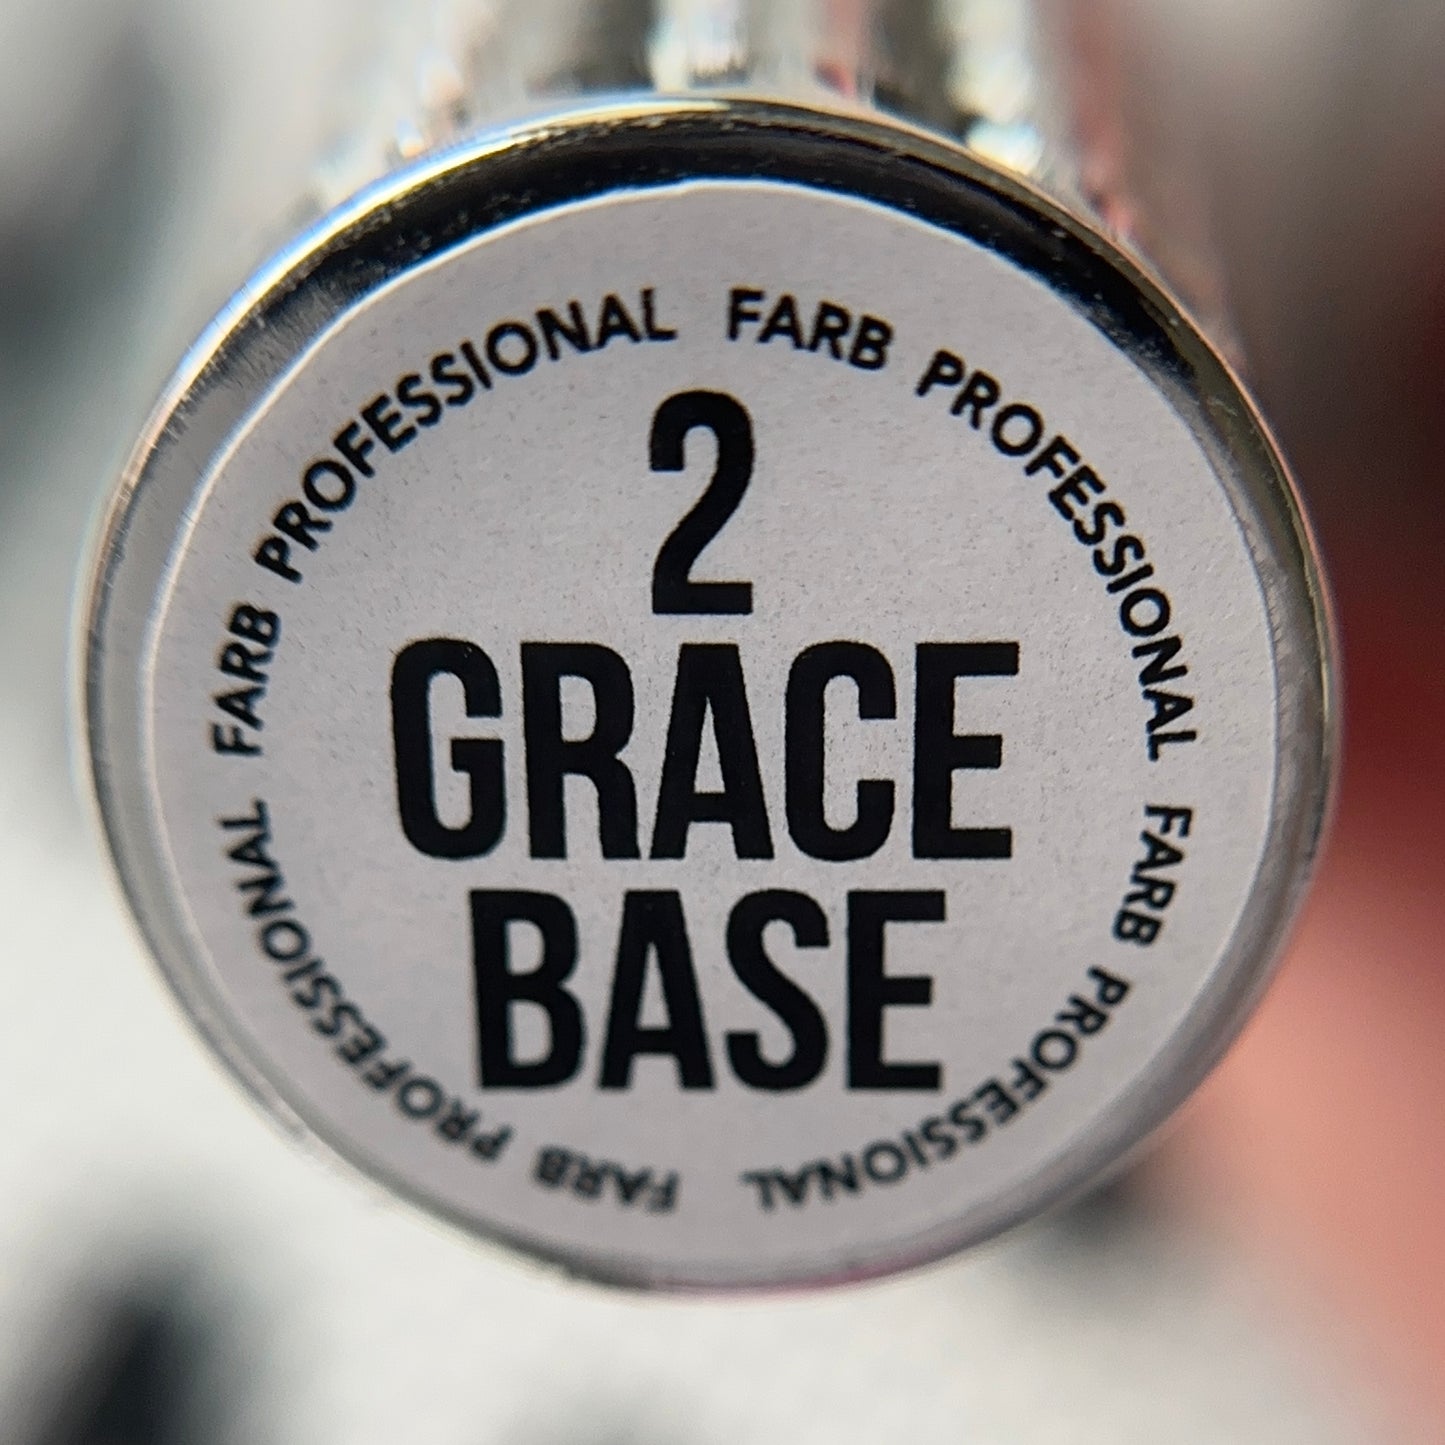 FARB Professional ART BASE GRACE #2, 15ml